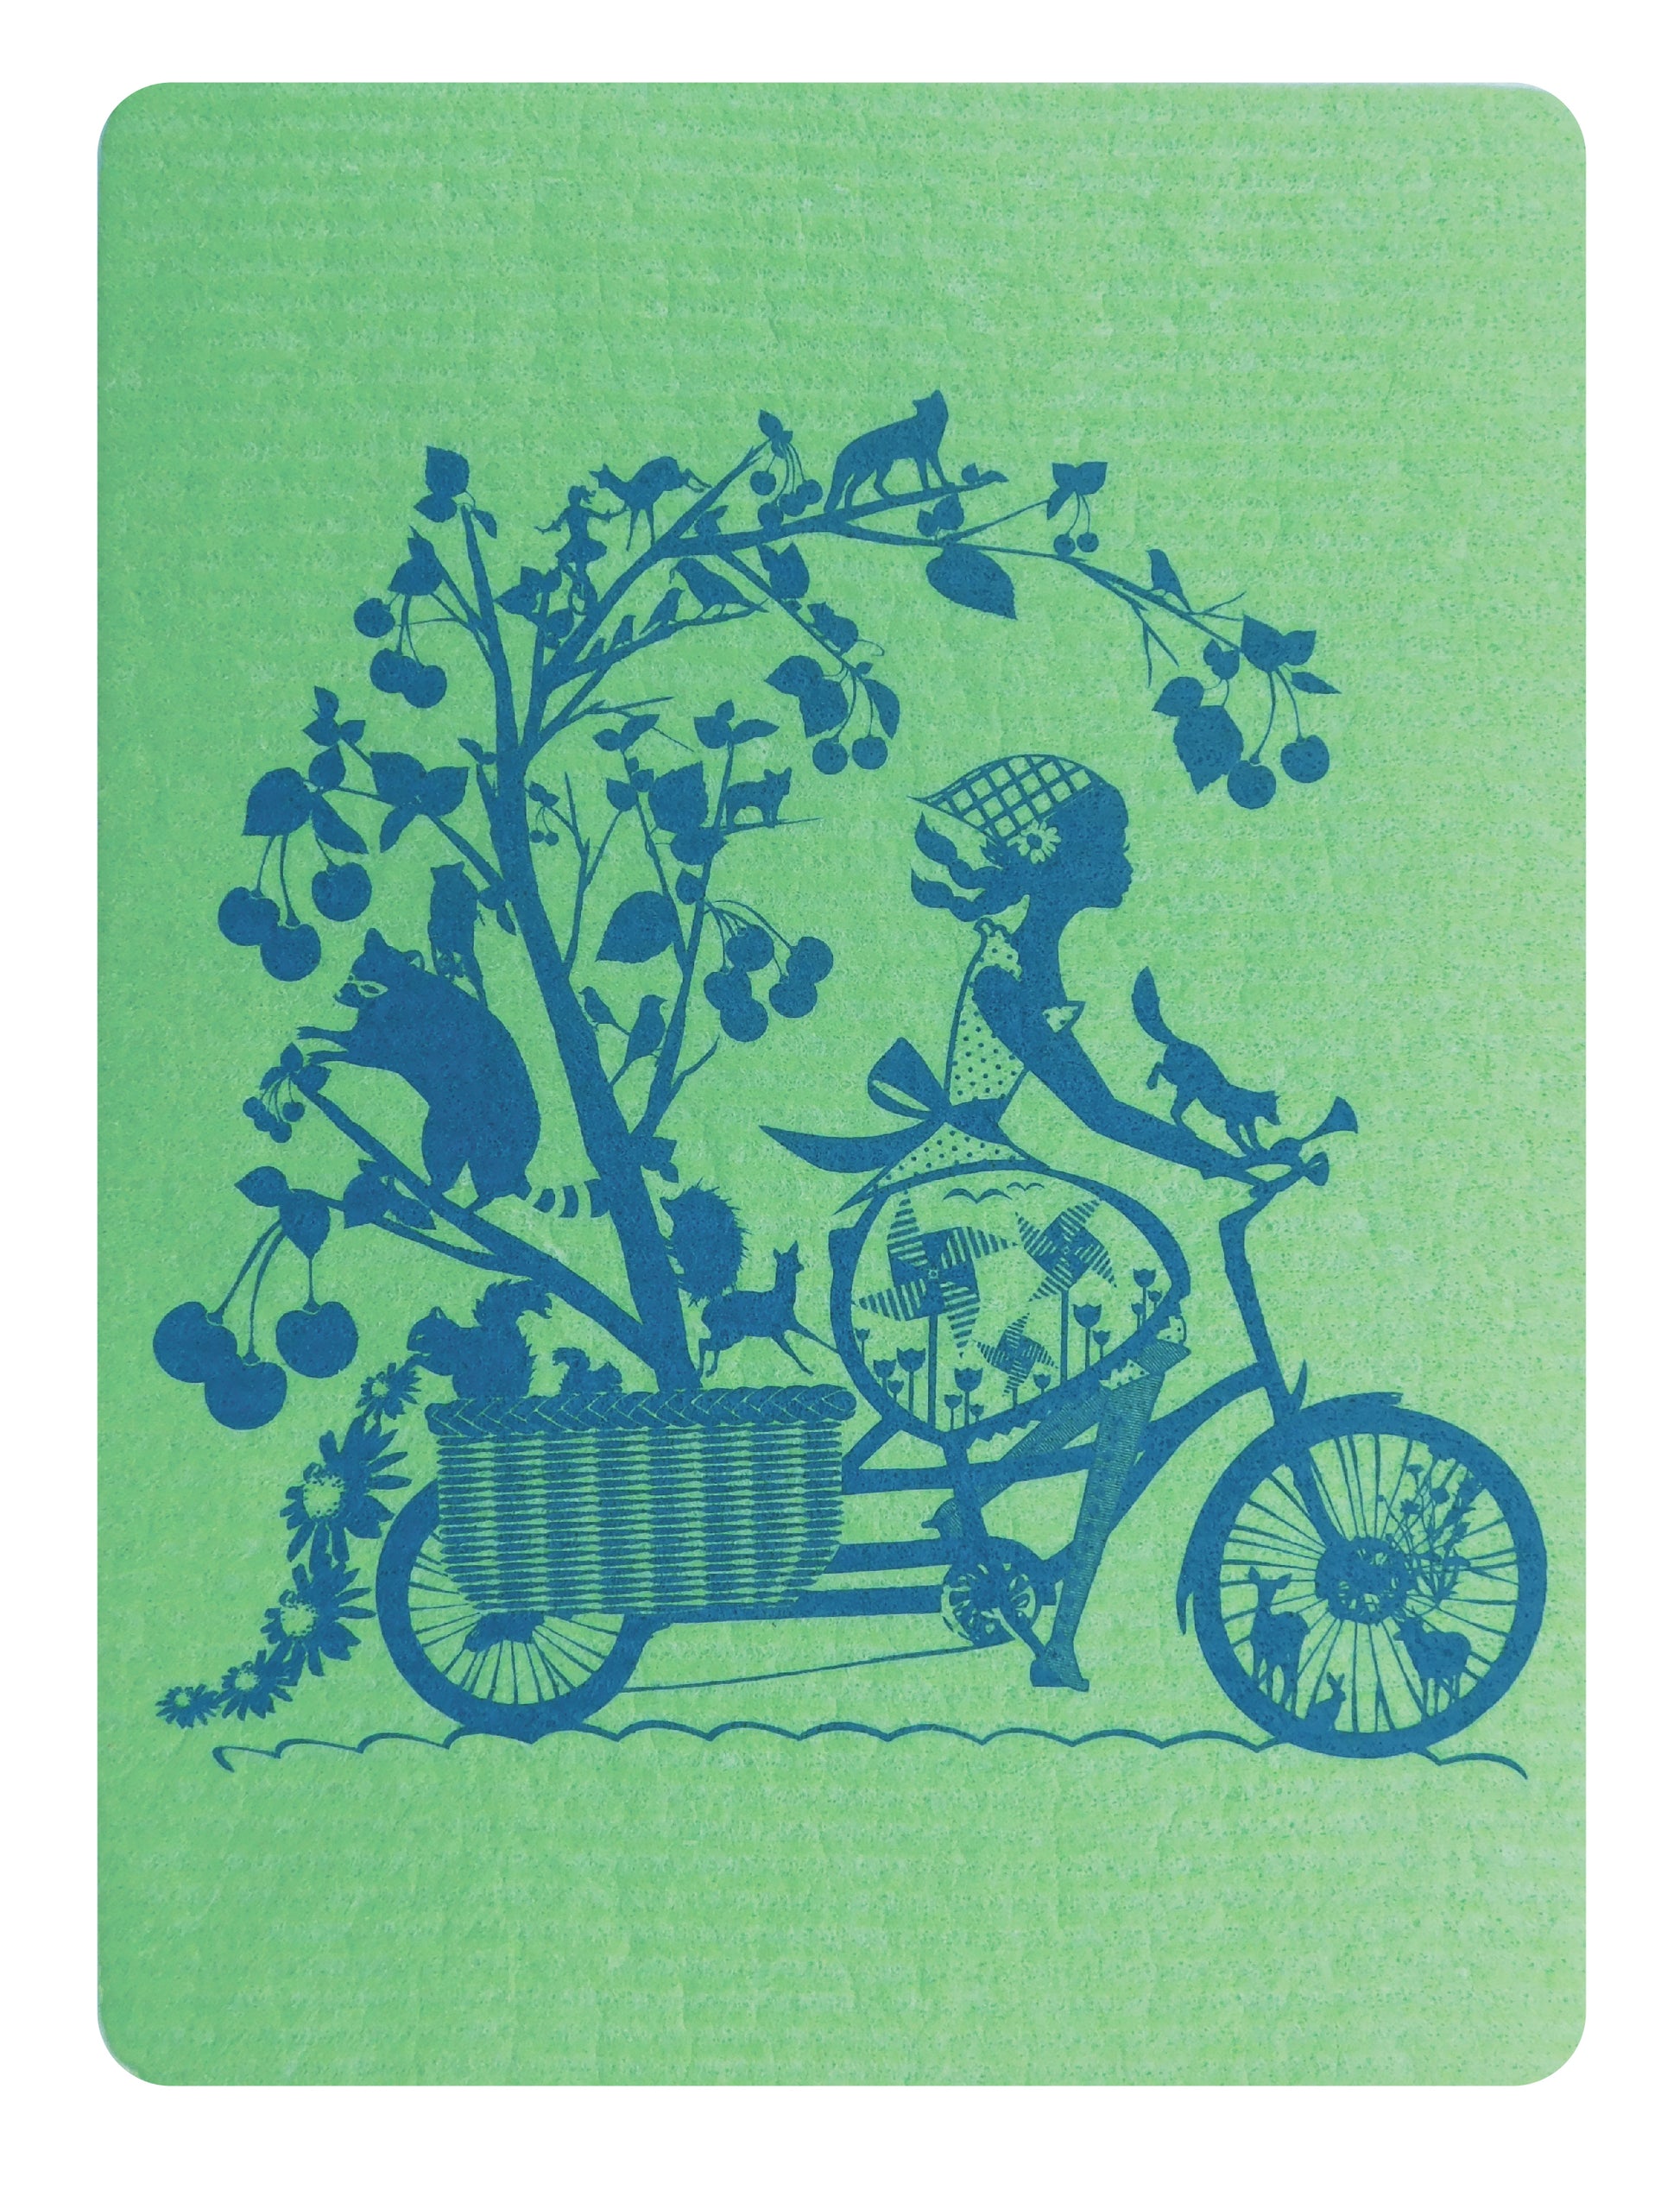 Green Swedish dishcloth with dark blue graphic of woman riding a bike